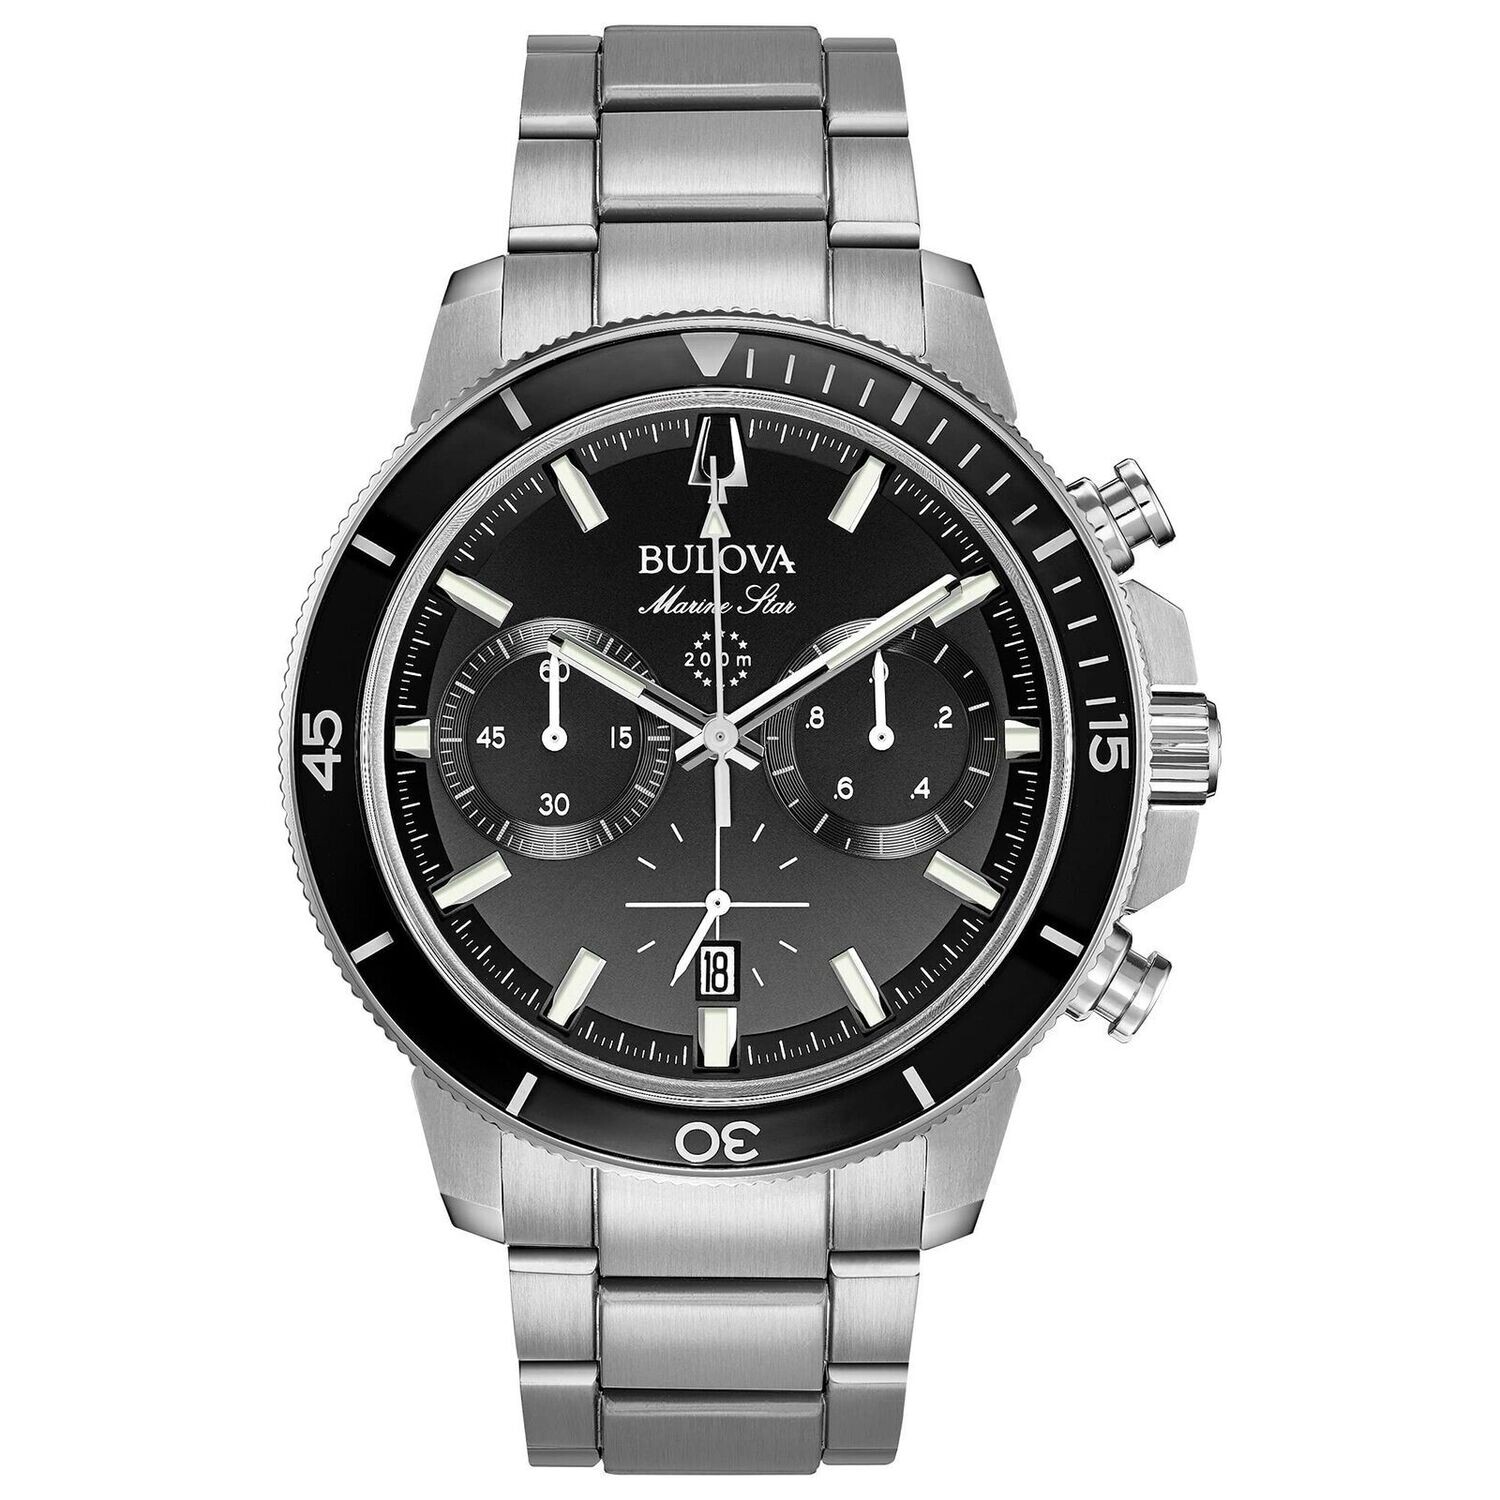 Bulova Marine Star 96B272 45mm black dial Chronograph 200m Water resist stainless steel bracelet men's sport watch